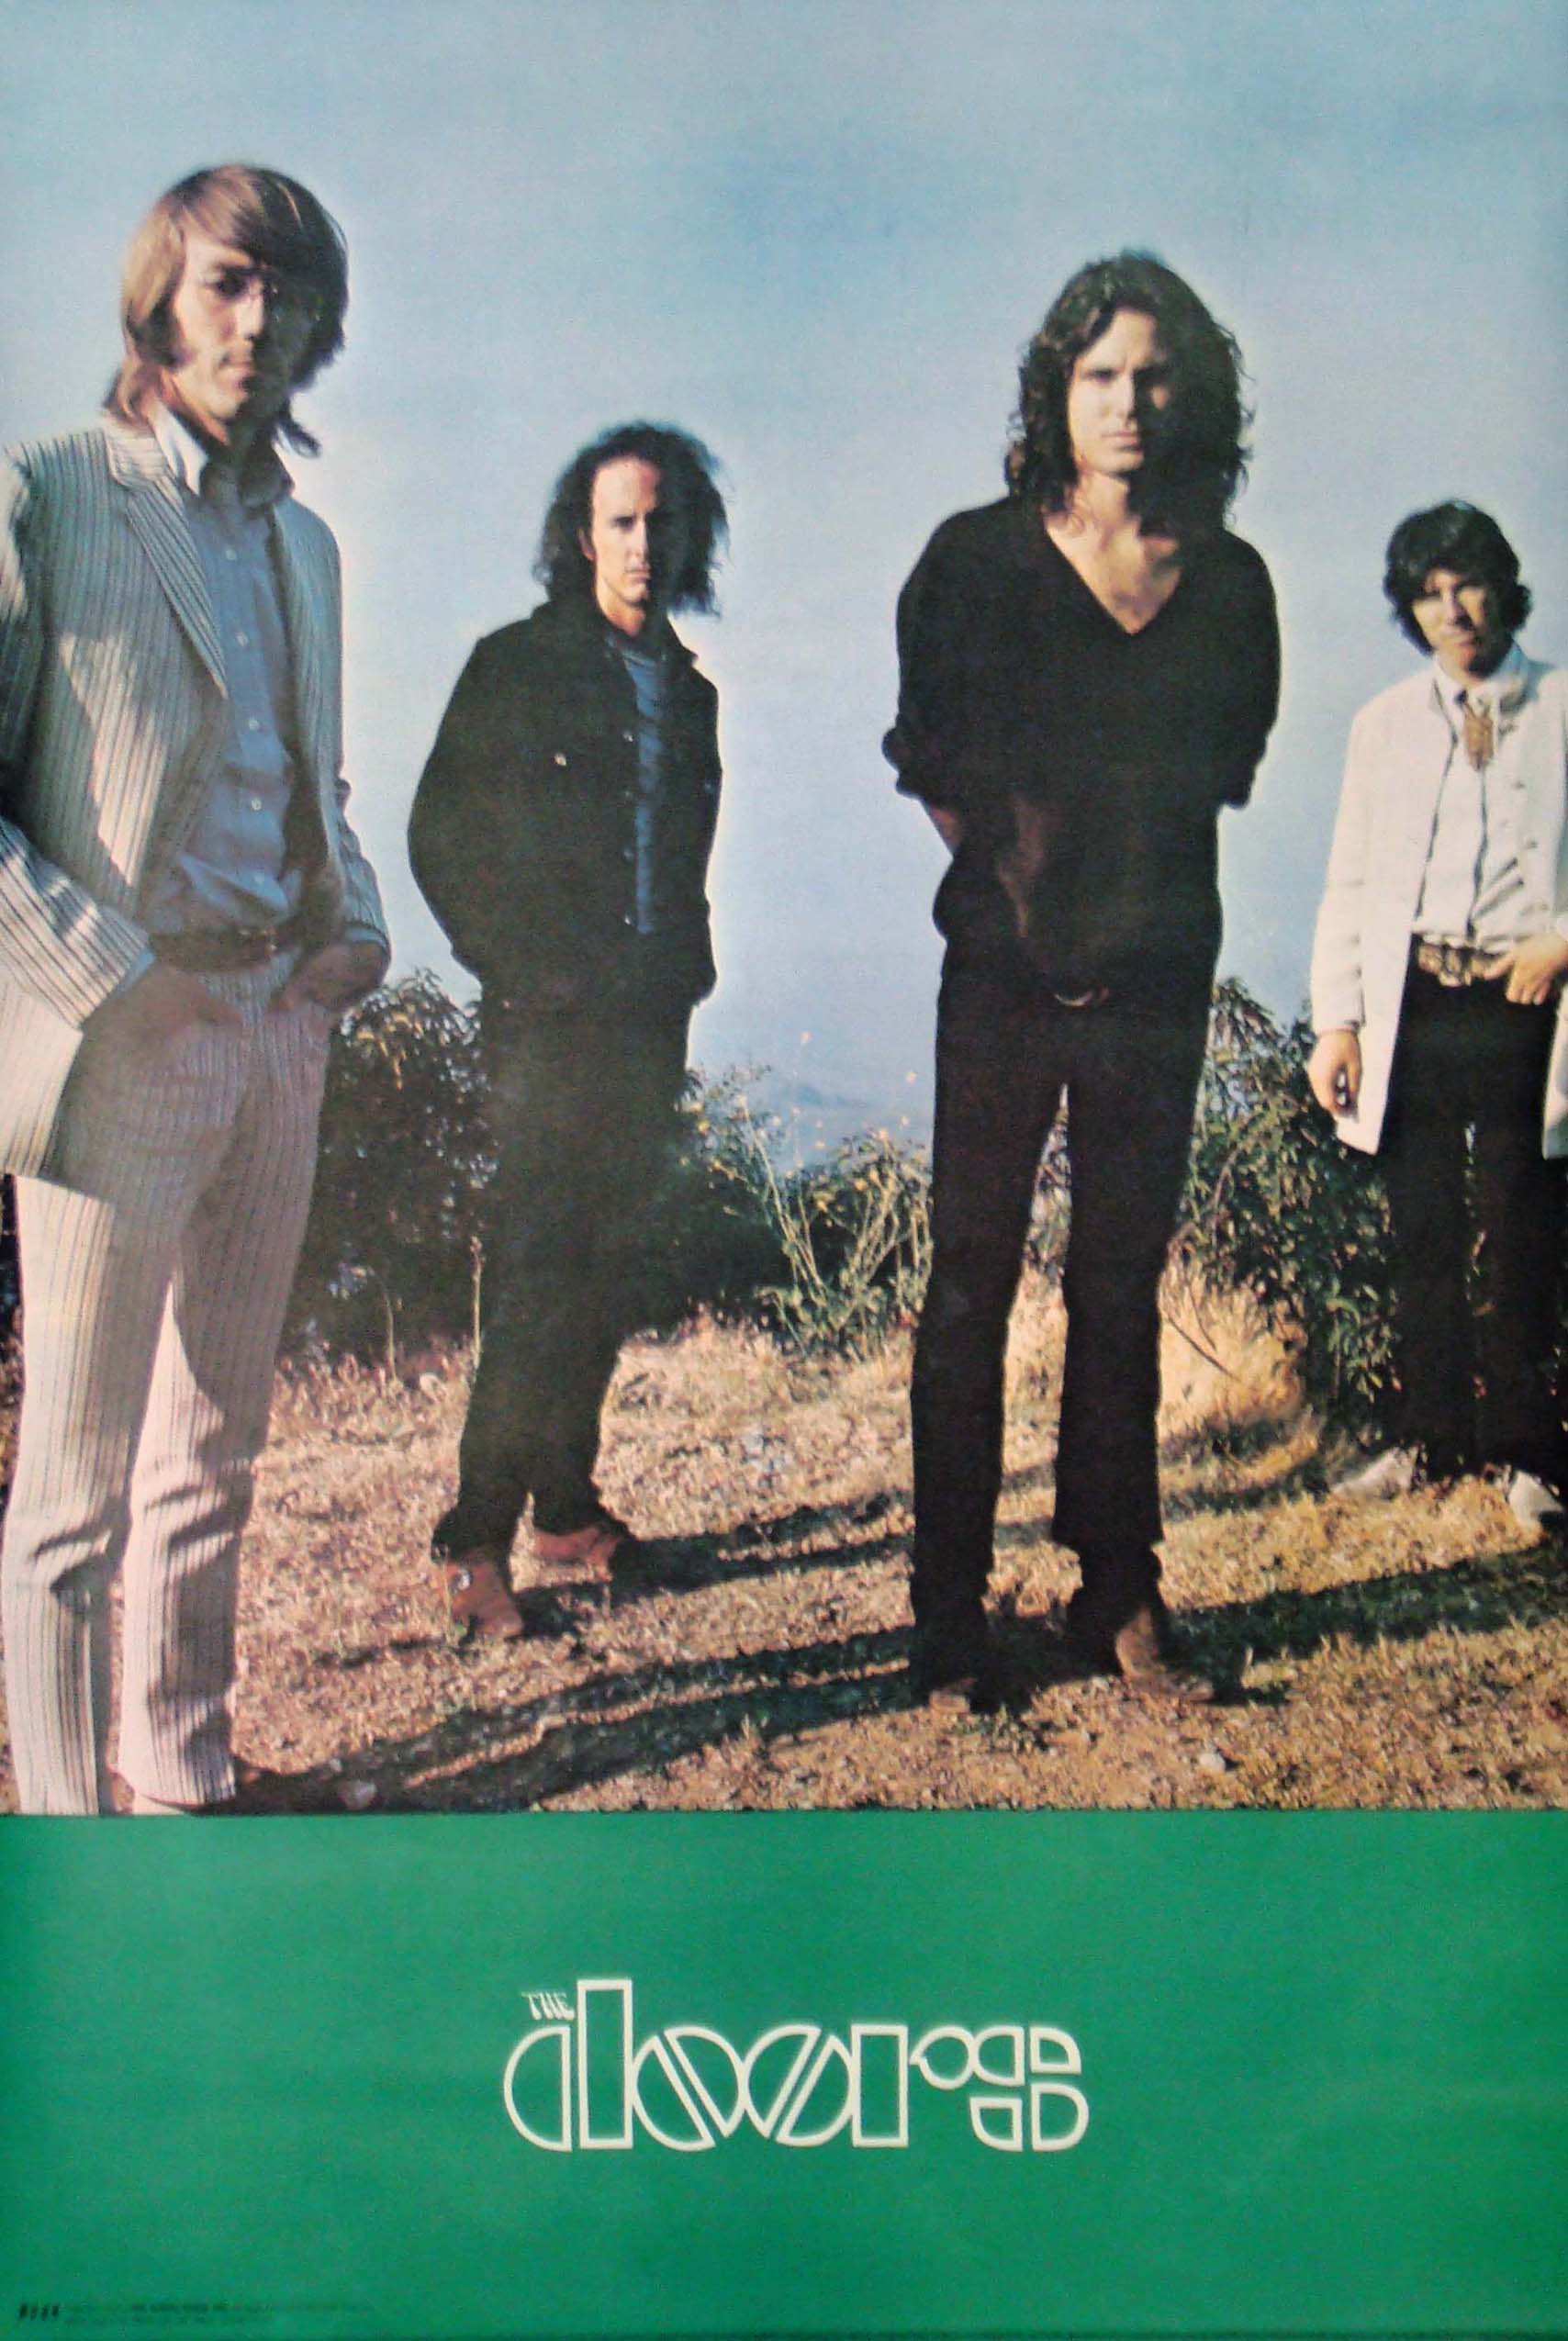  The Doors Original Commercial Poster